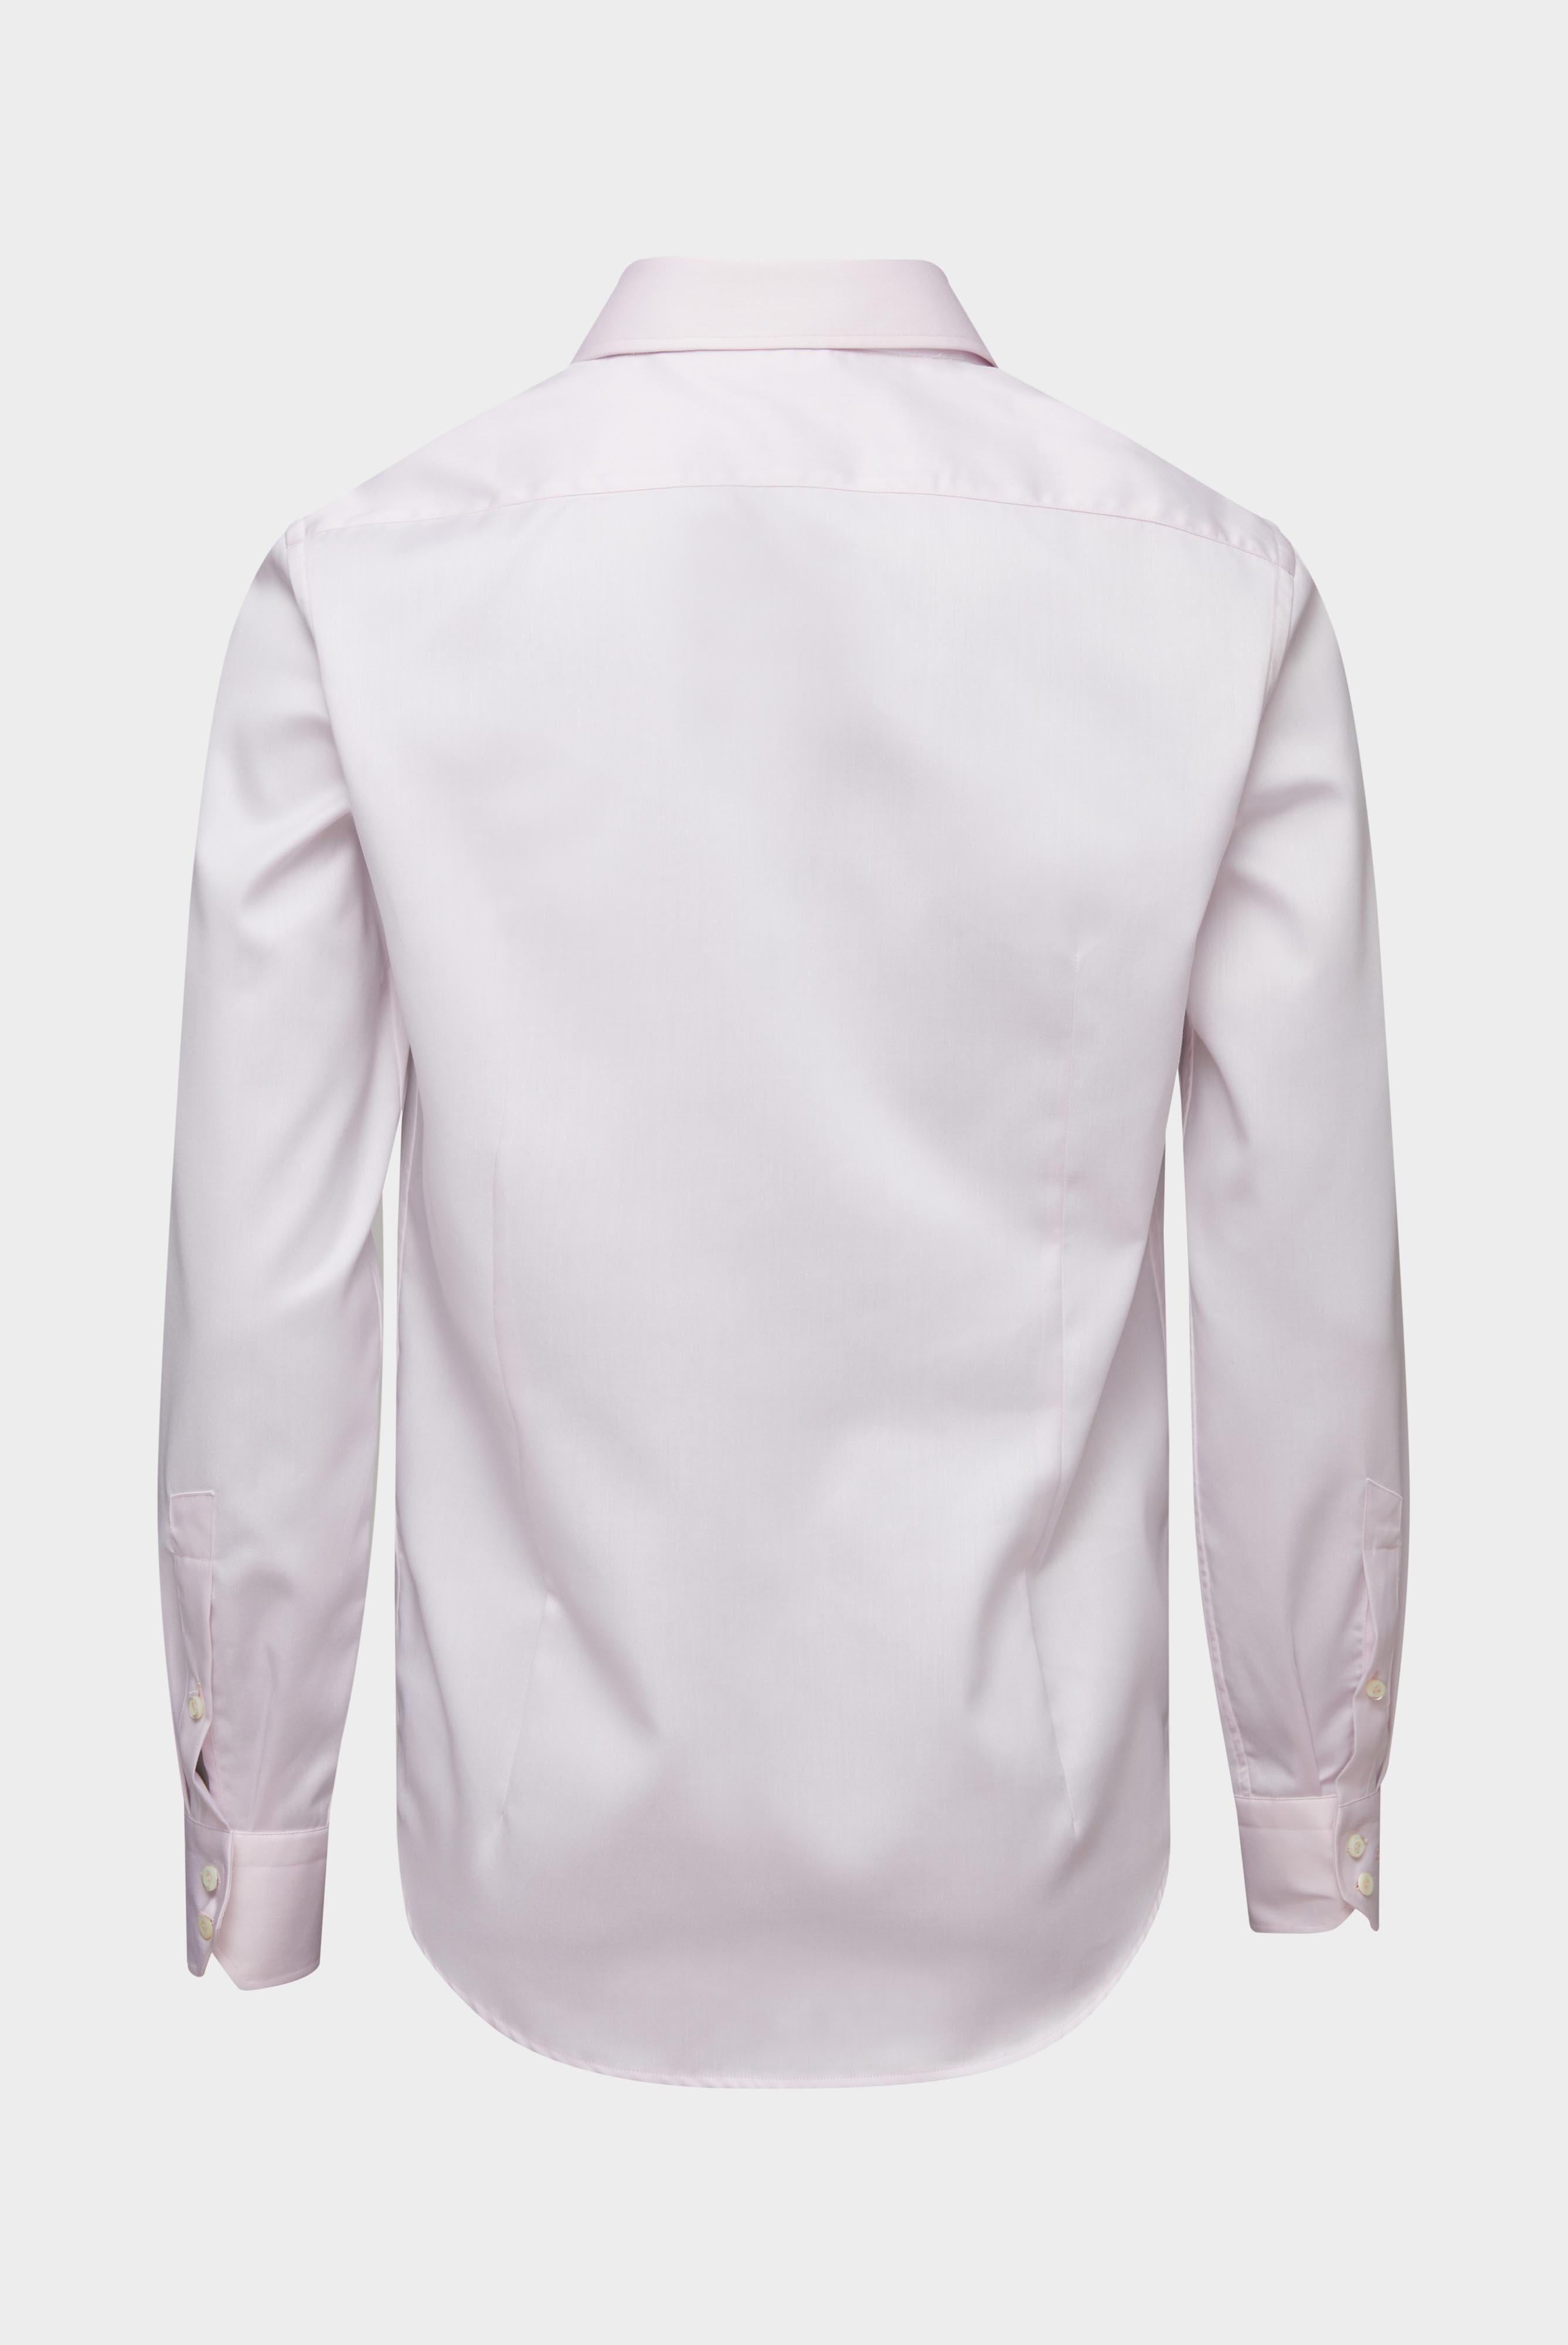 Easy Iron Shirts+Wrinkle-Free Fine-Twill Shirt+20.2019.BQ.132241.510.37